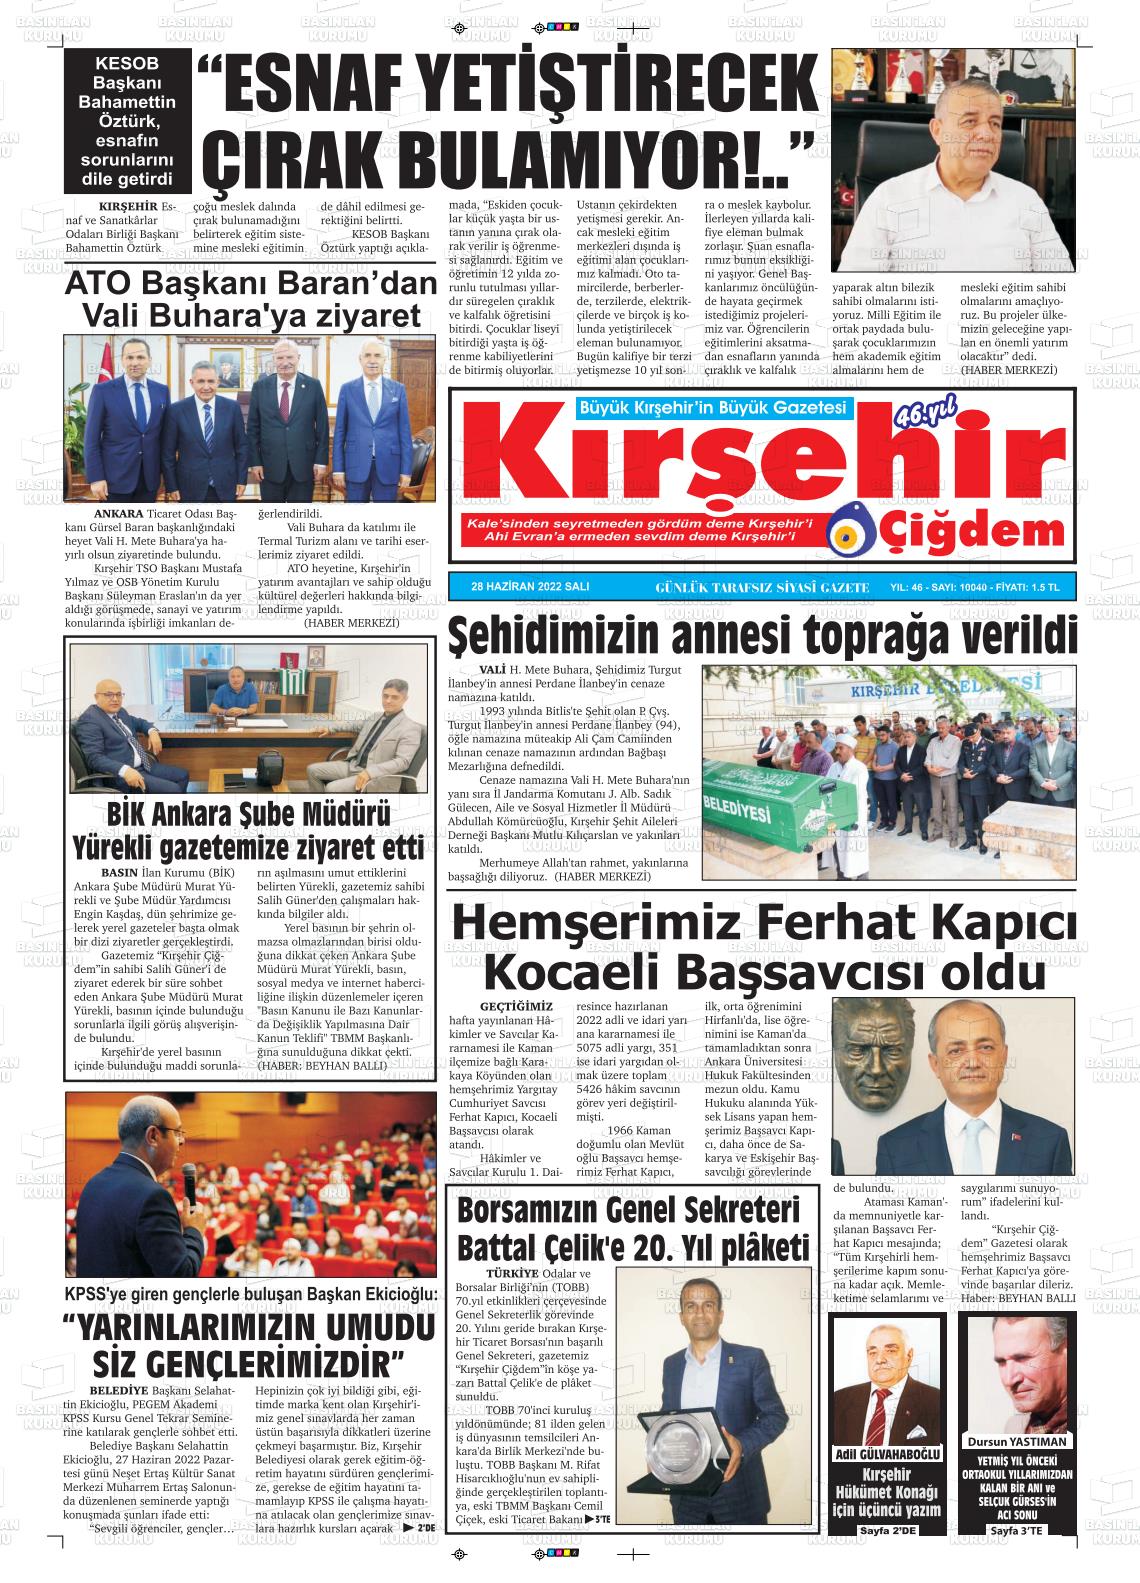 28 Haziran 2022 Kırşehir Çiğdem Gazete Manşeti